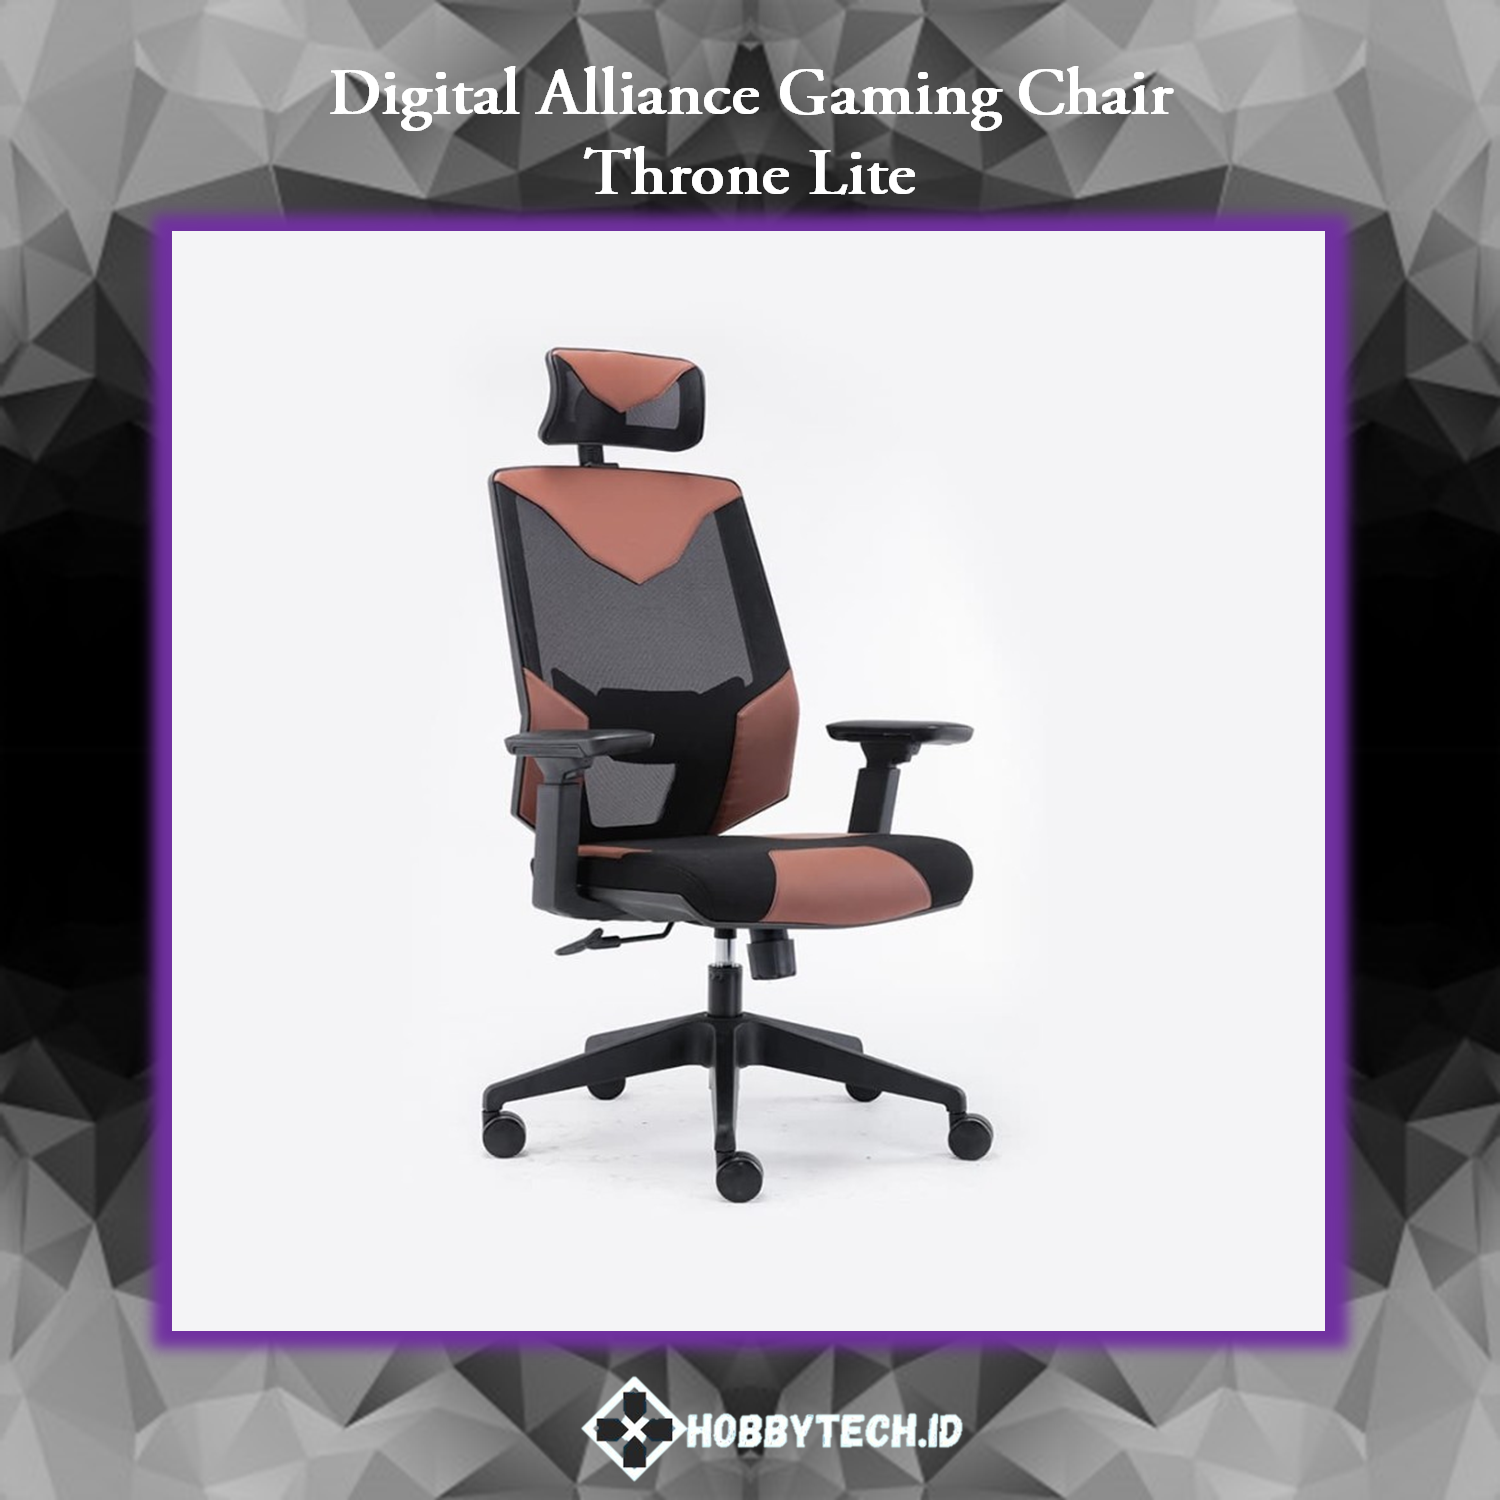 Digital Alliance Gaming Chair Throne Lite